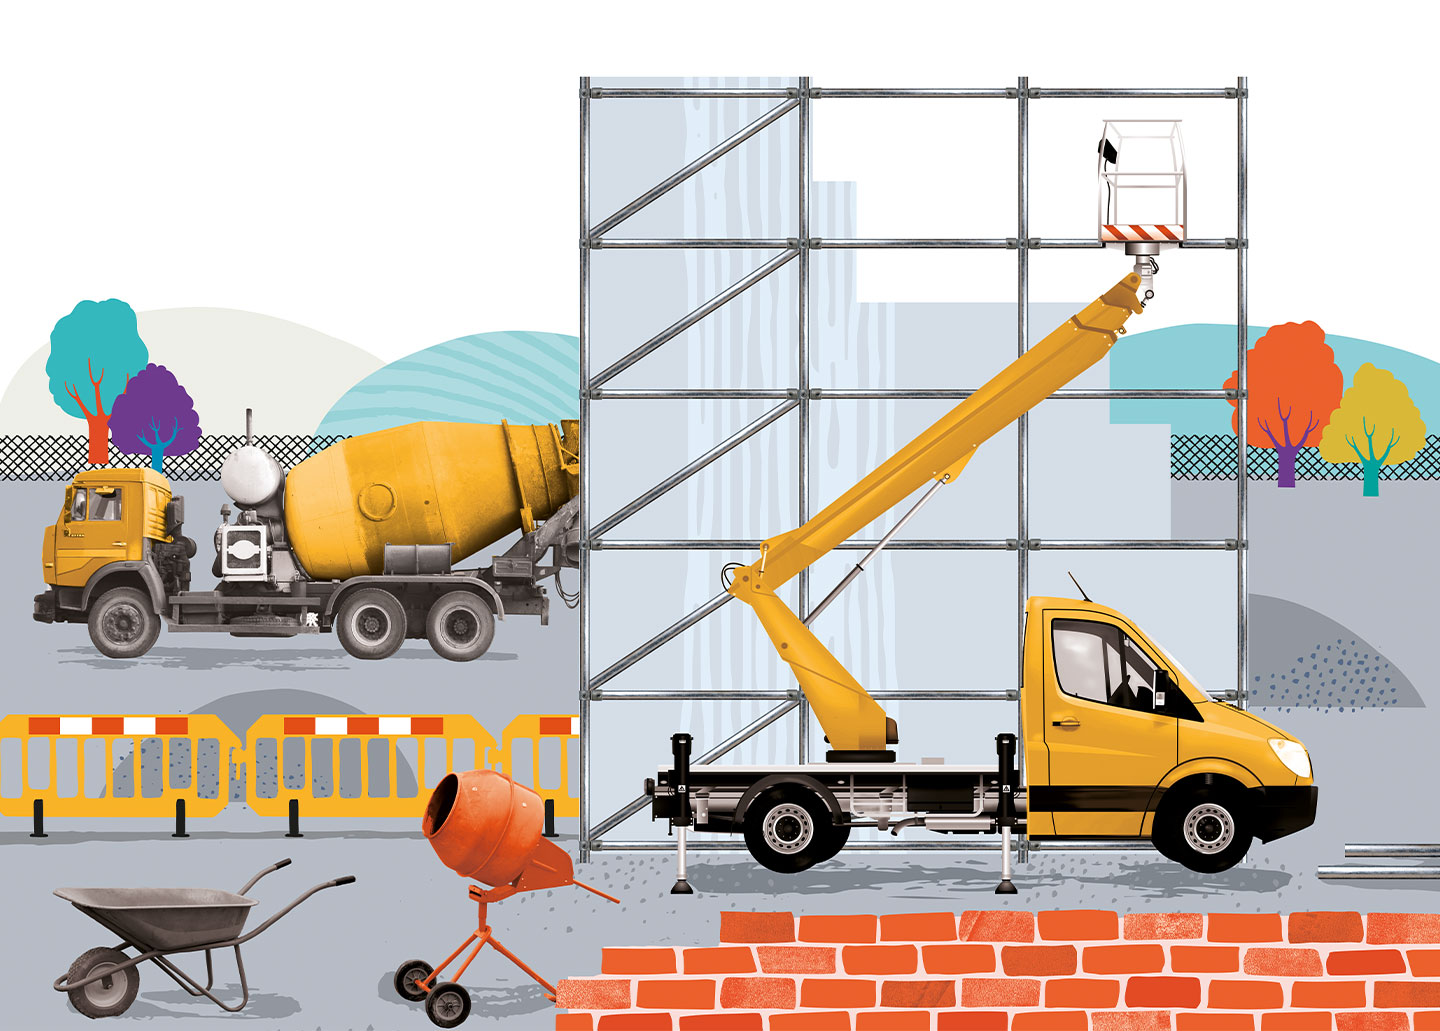 Illustration of Construction Site